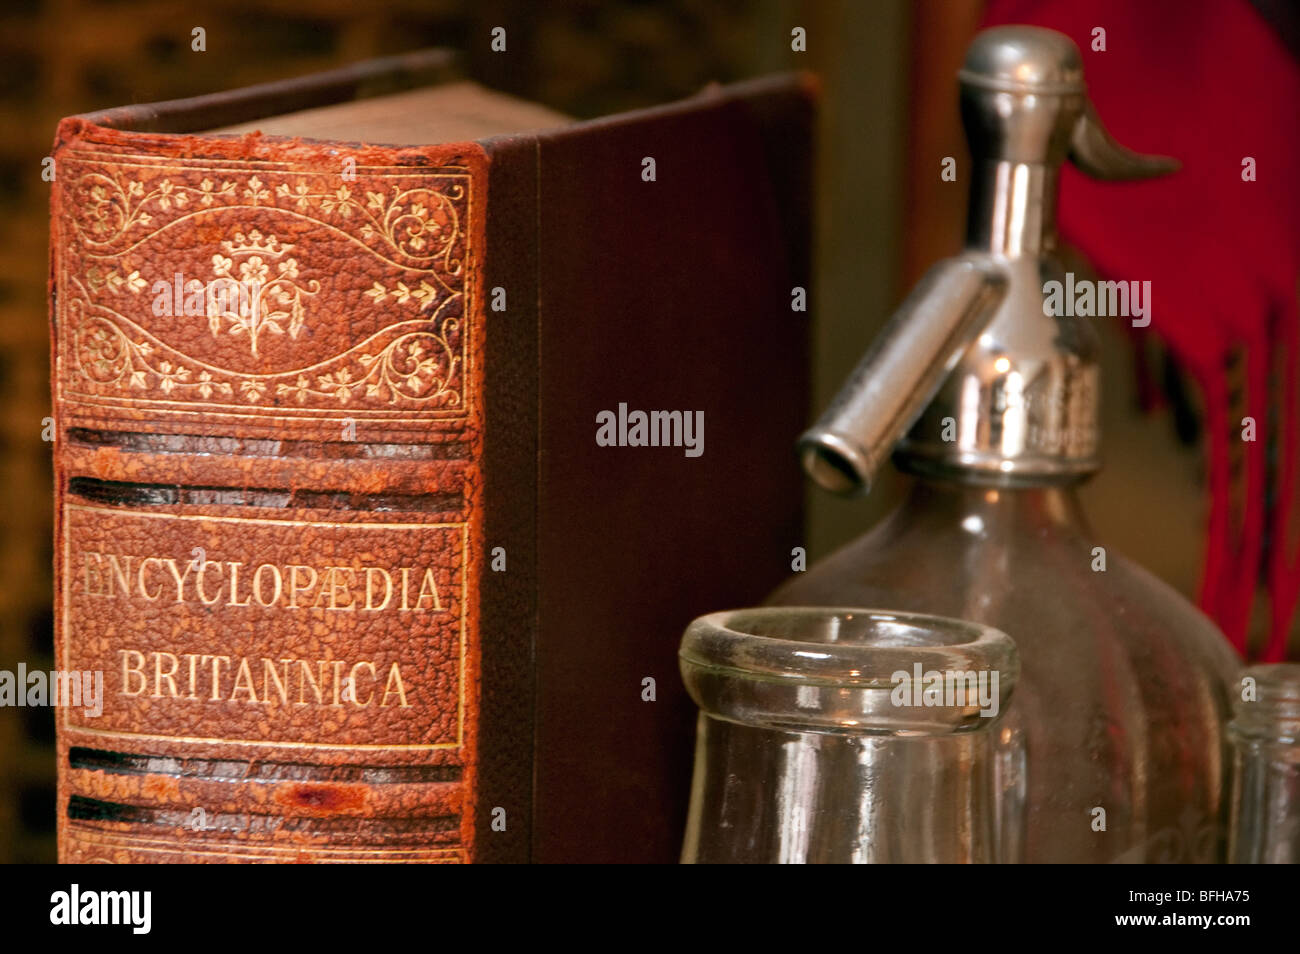 Encyclopedia Britannica, New Zealand Whiskey Company, Oamaru, South Island, New Zealand. Stock Photo